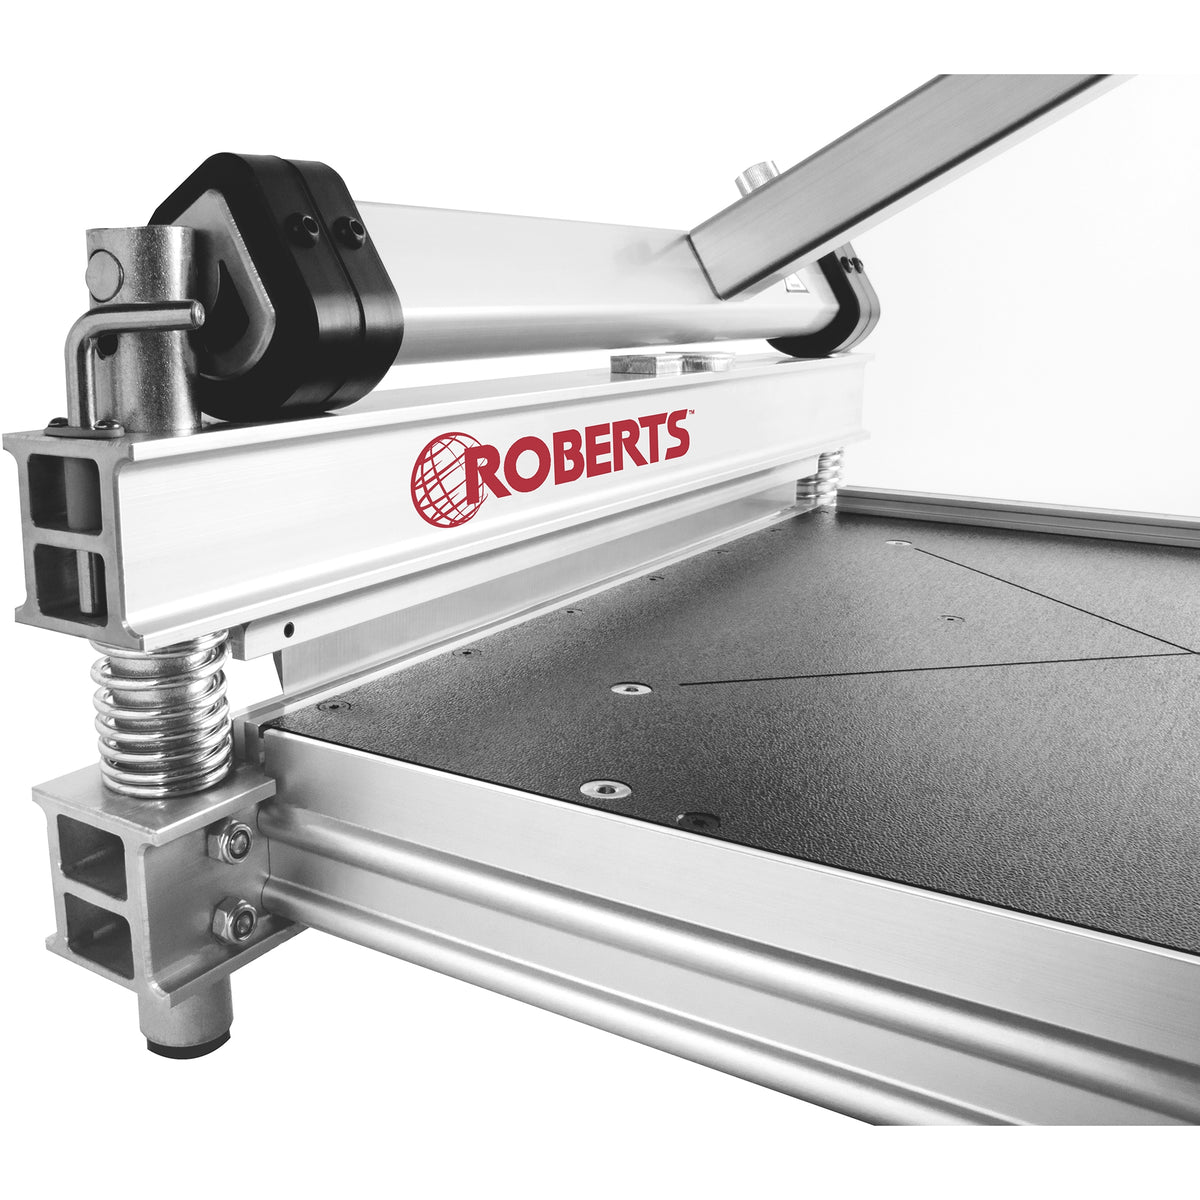 Roberts 10918 Vinyl Tile Cutter 18 in for sale online